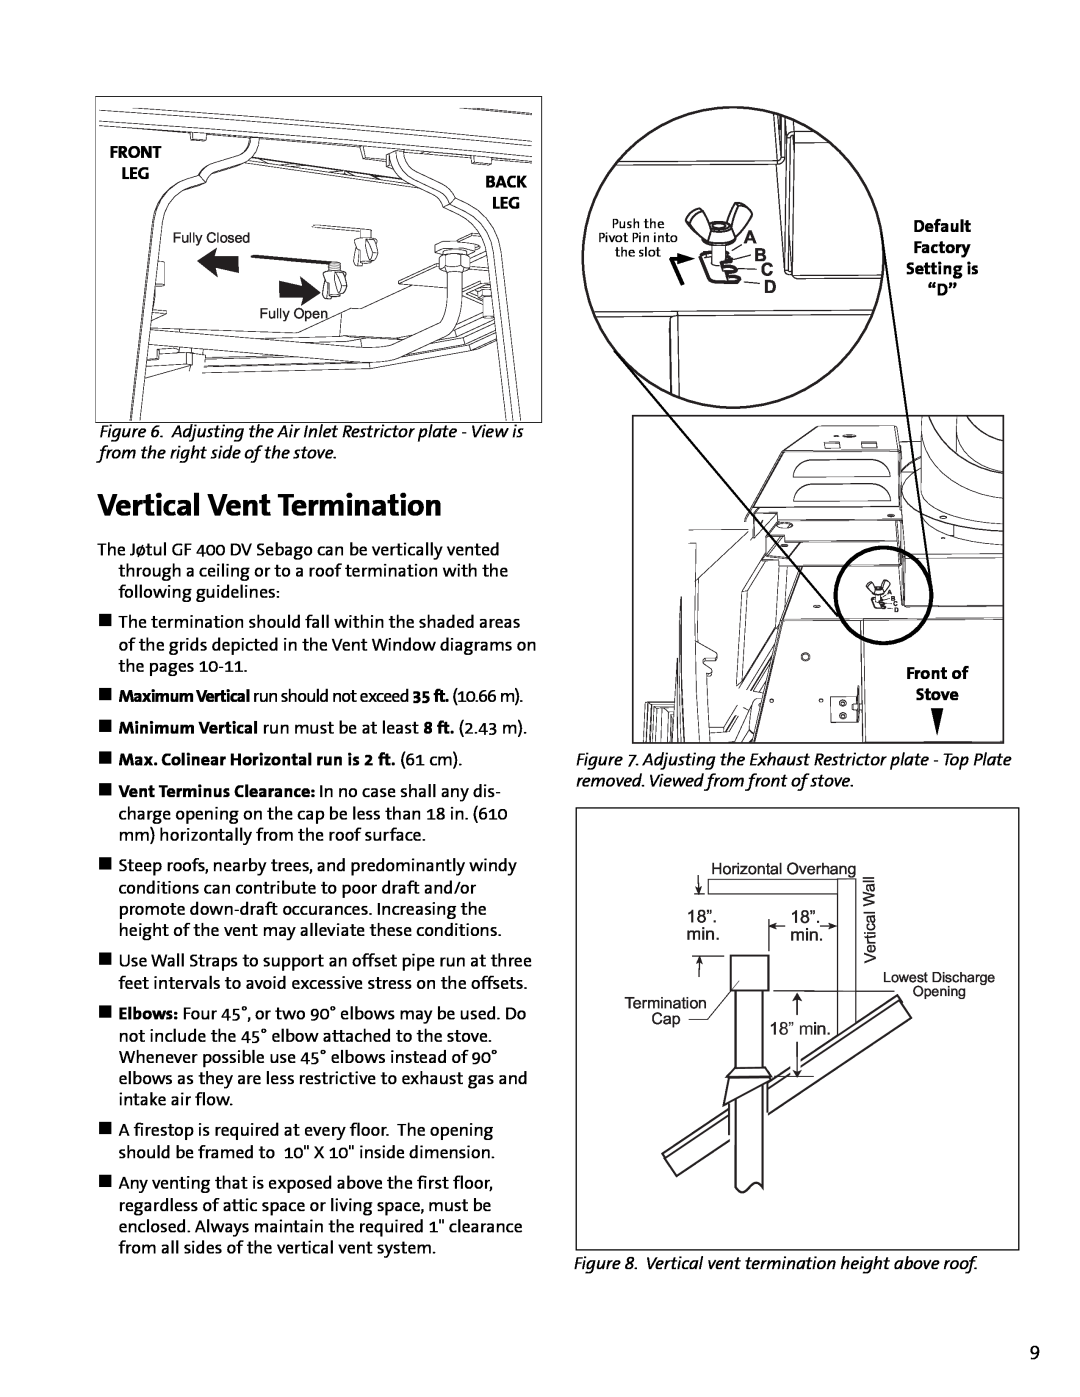 Jotul GF 400 DV manual Vertical Vent Termination 